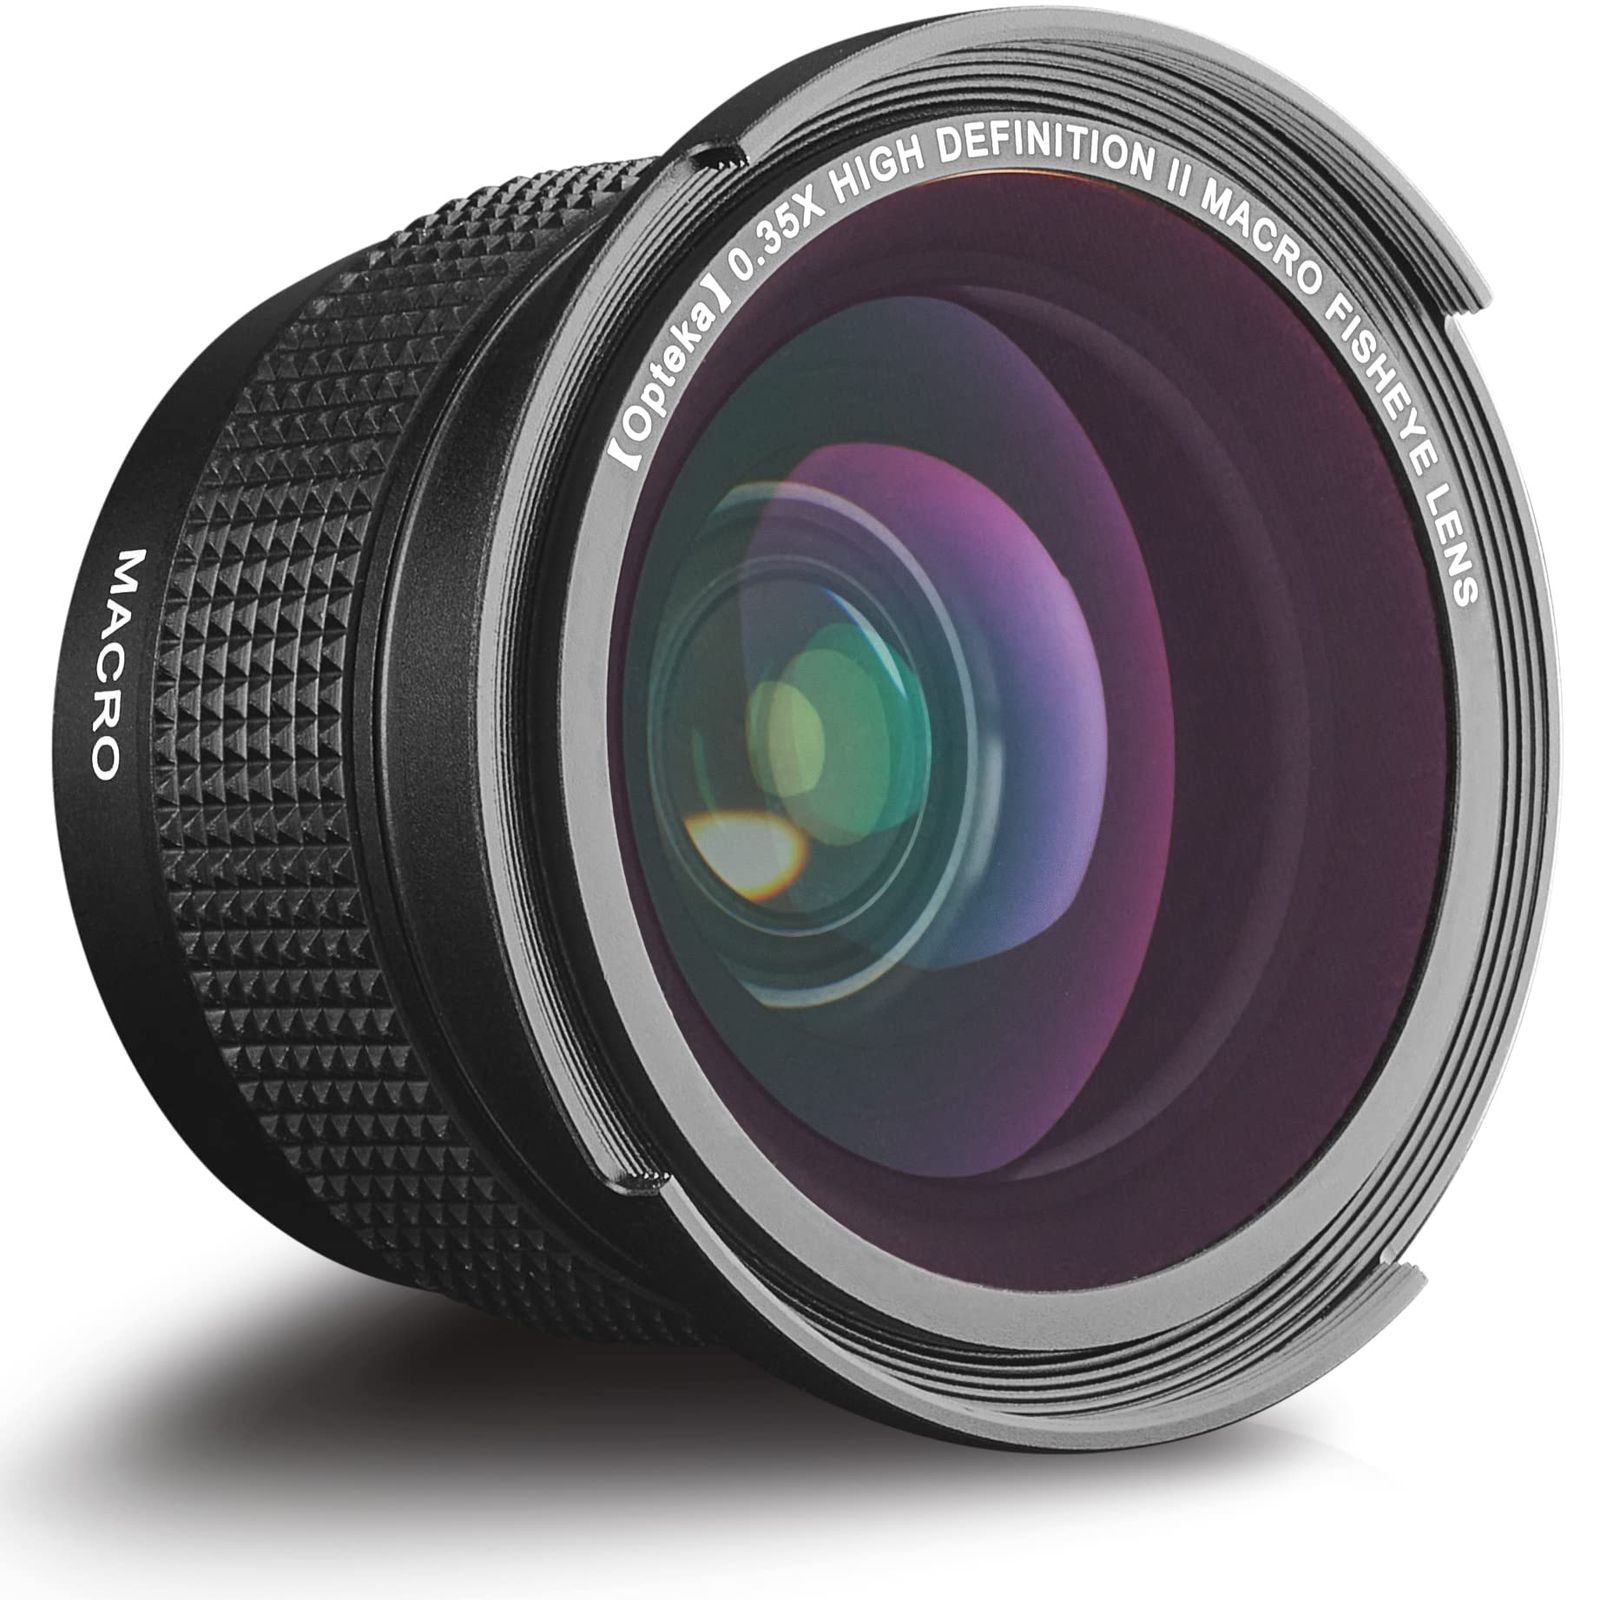 Opteka 0.35x HD2 スーパー広角パノラママクロ魚眼レンズ Canon EOS/EF